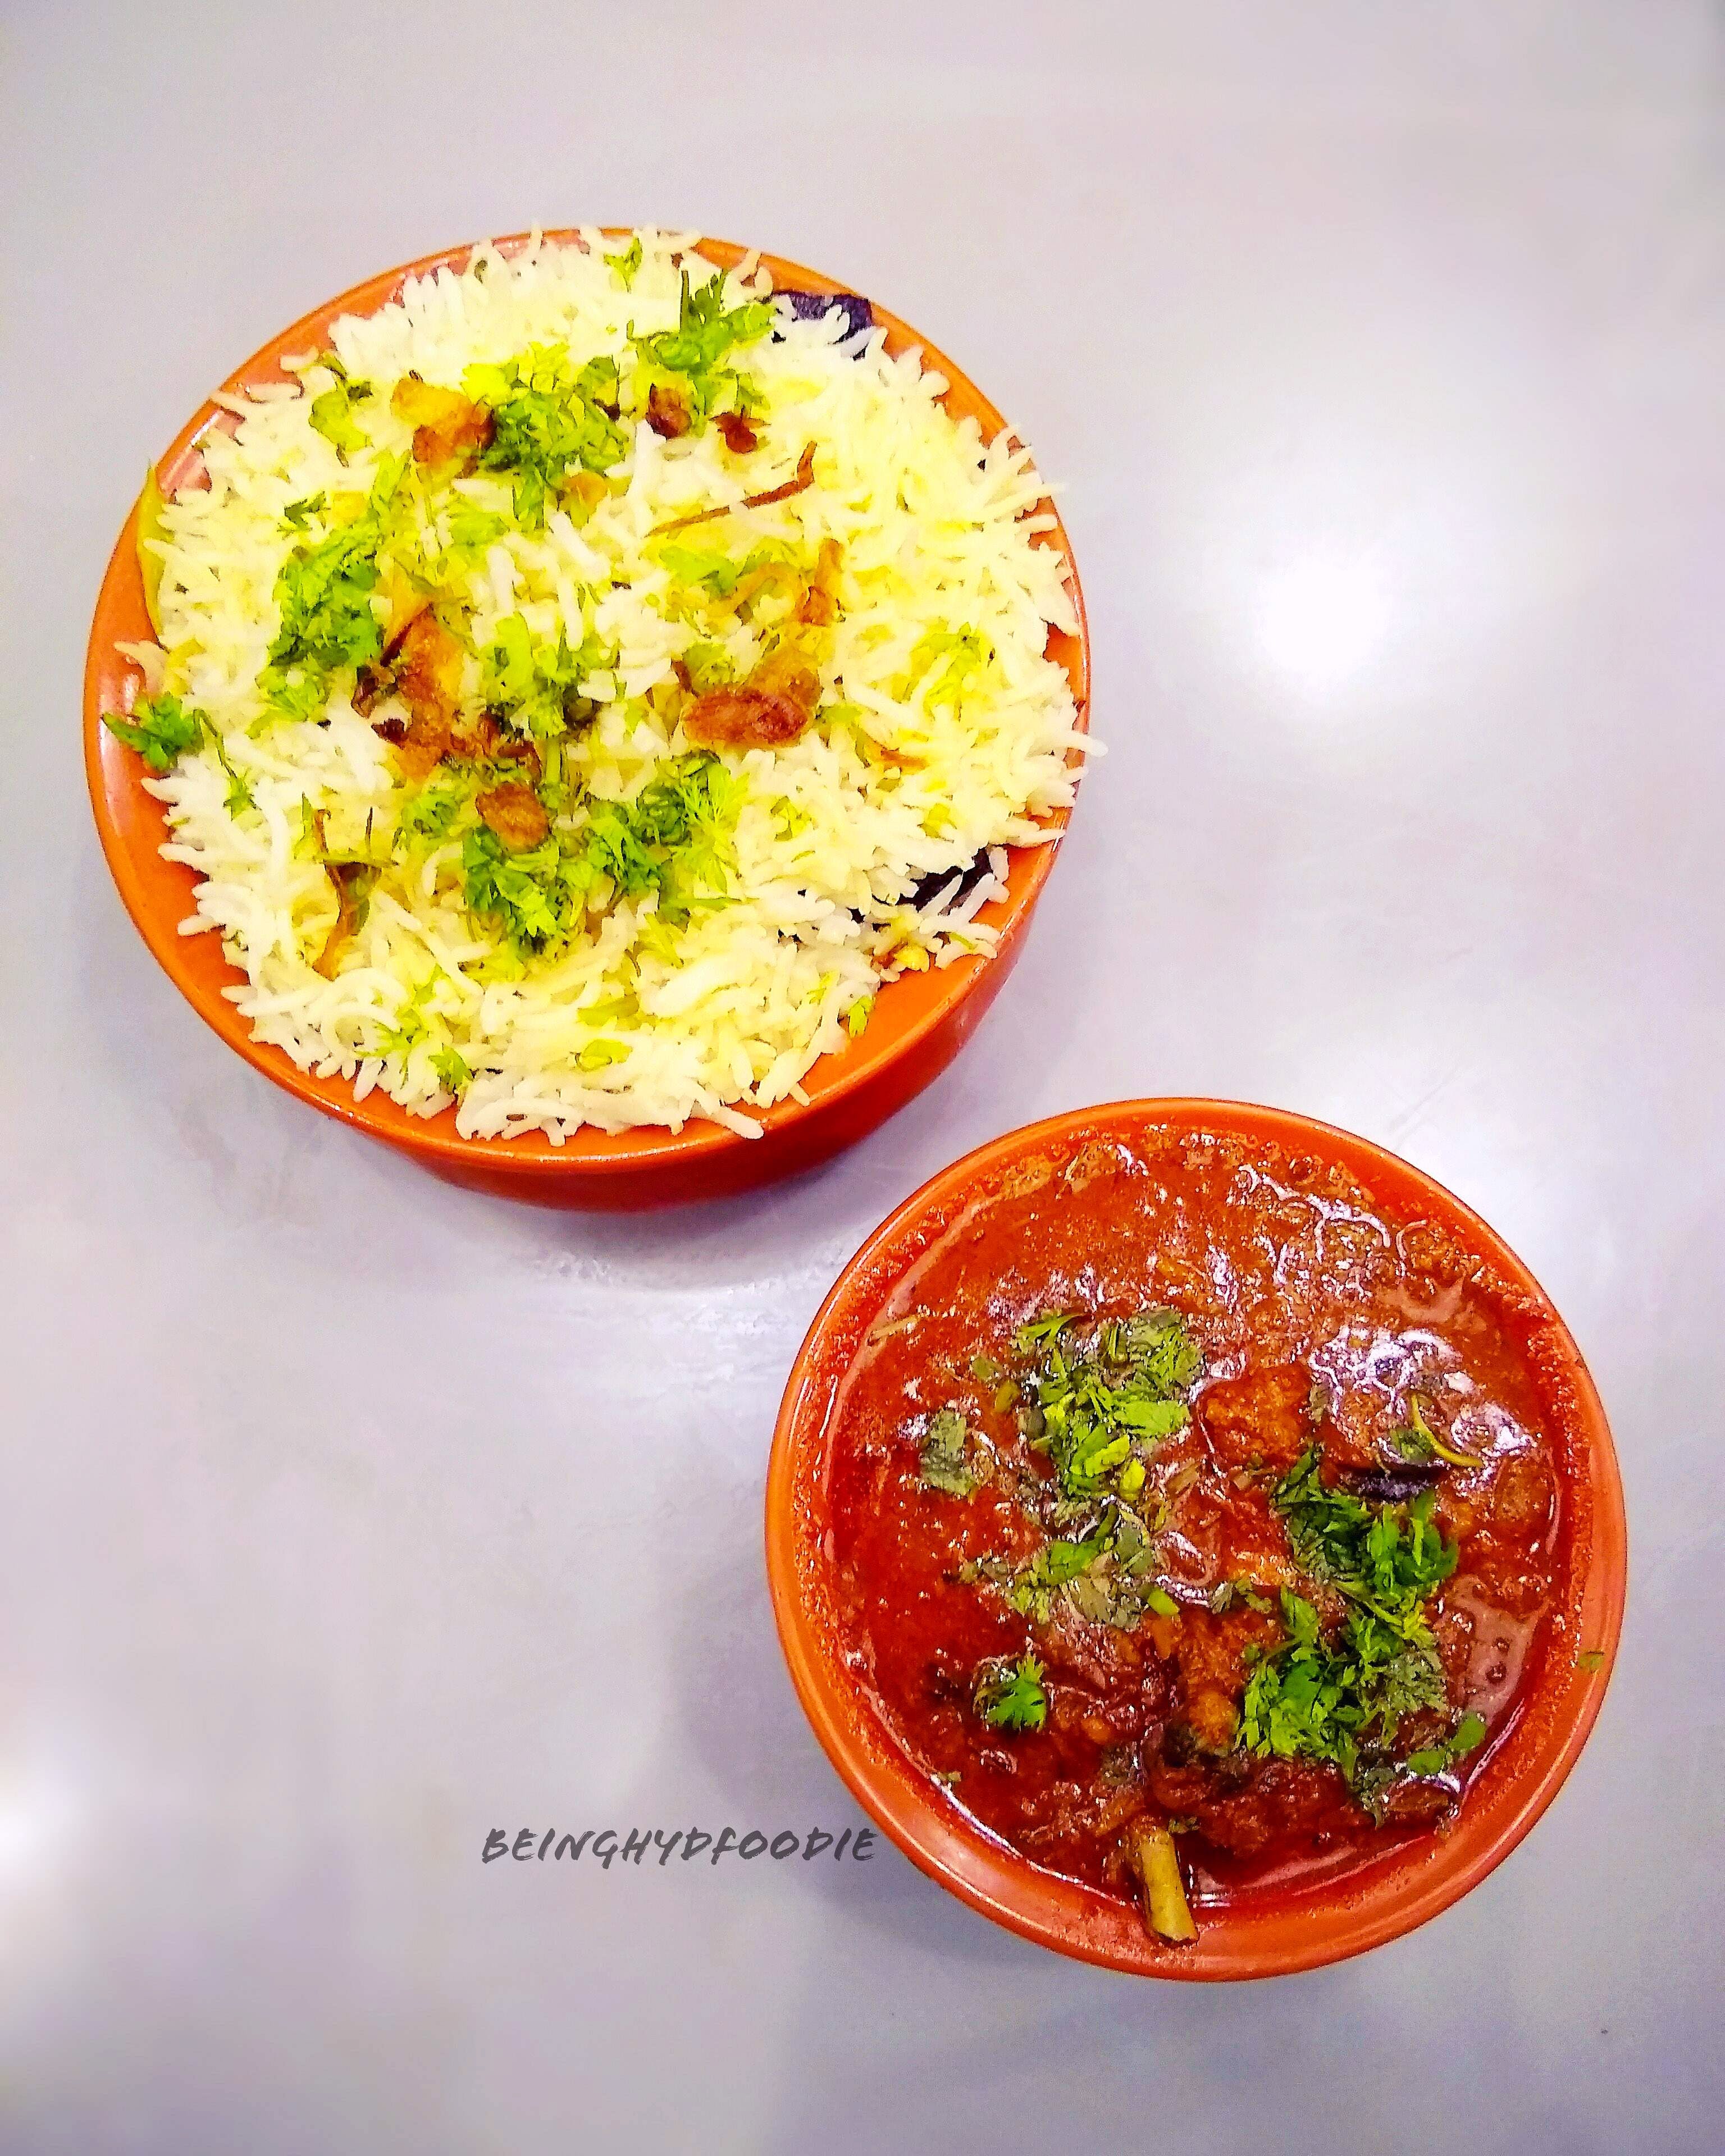 Dish,Food,Cuisine,Ingredient,Produce,Recipe,Garnish,Indian cuisine,Vegetarian food,Curry